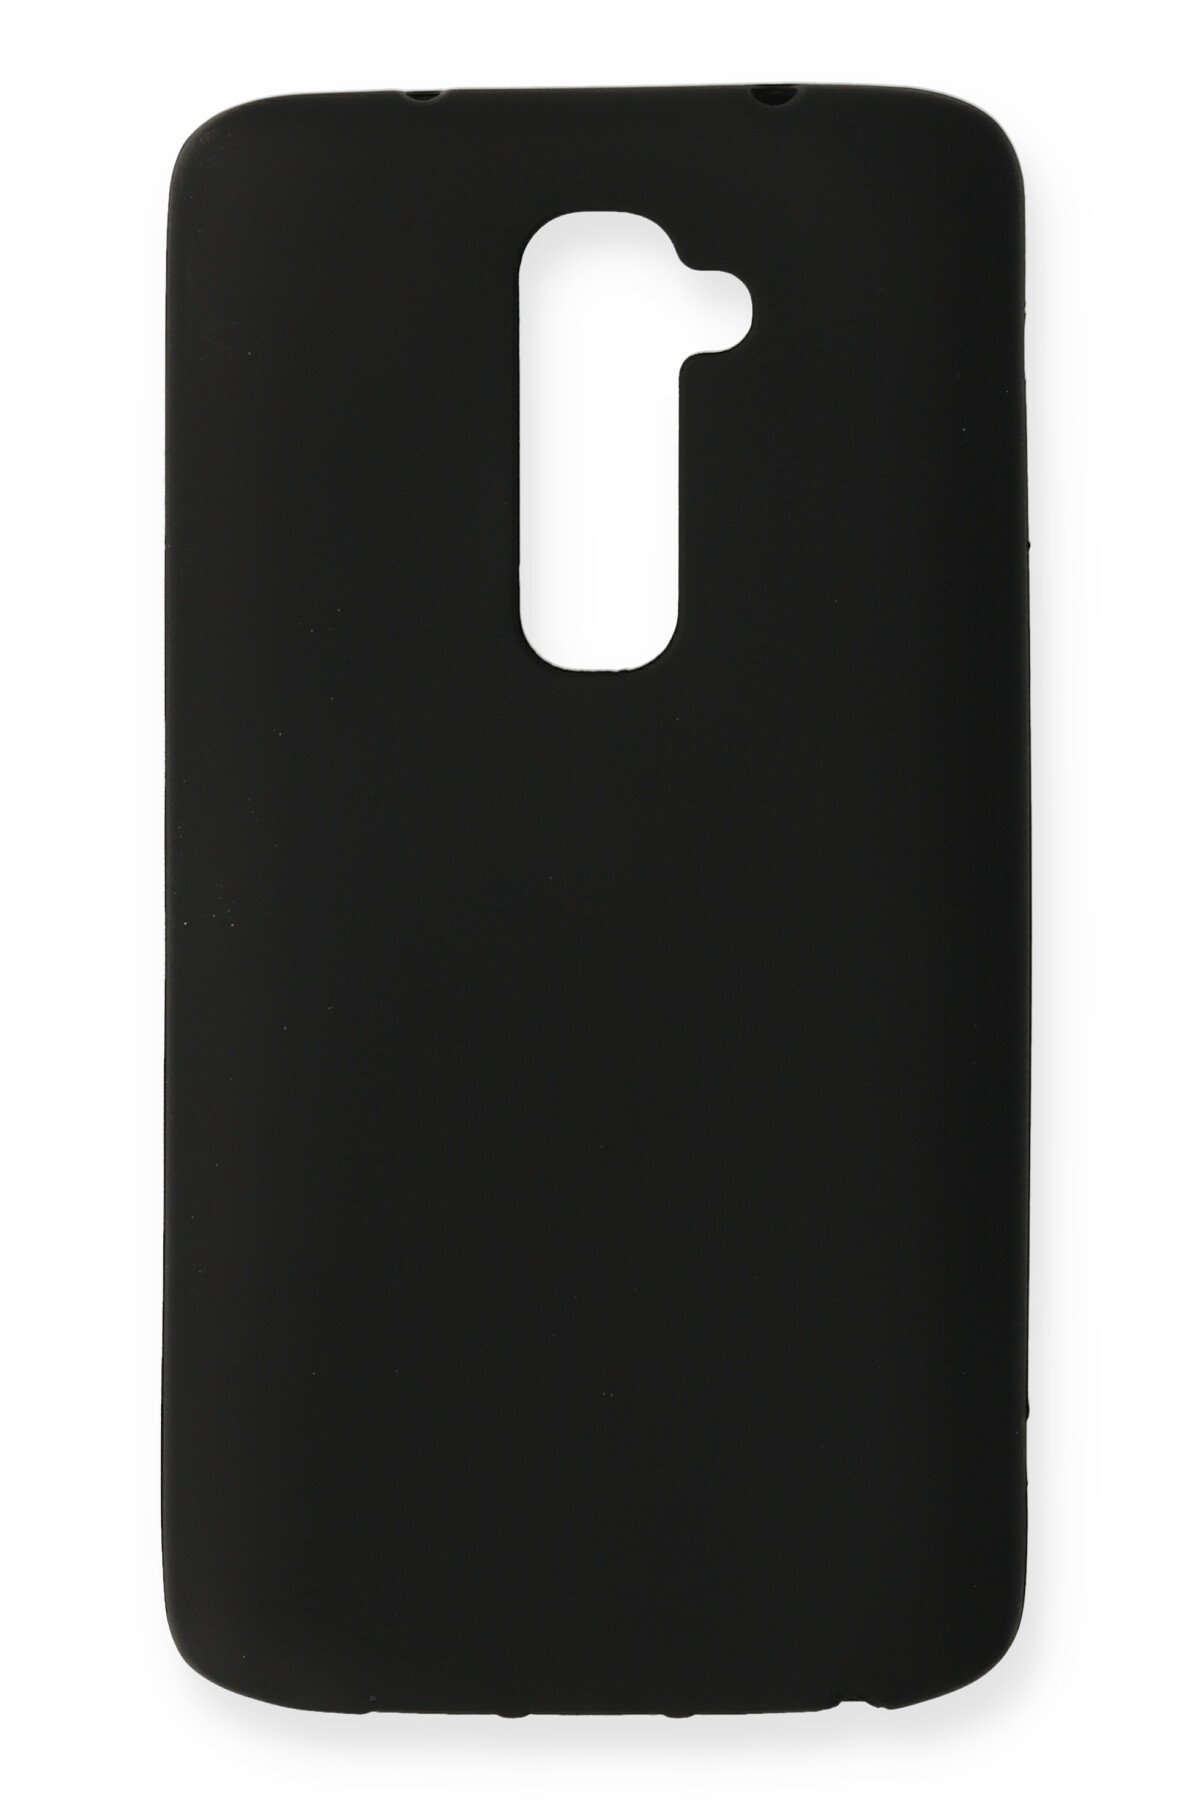 NewFace Newface LG G2 Kılıf Premium Rubber Silikon - Siyah